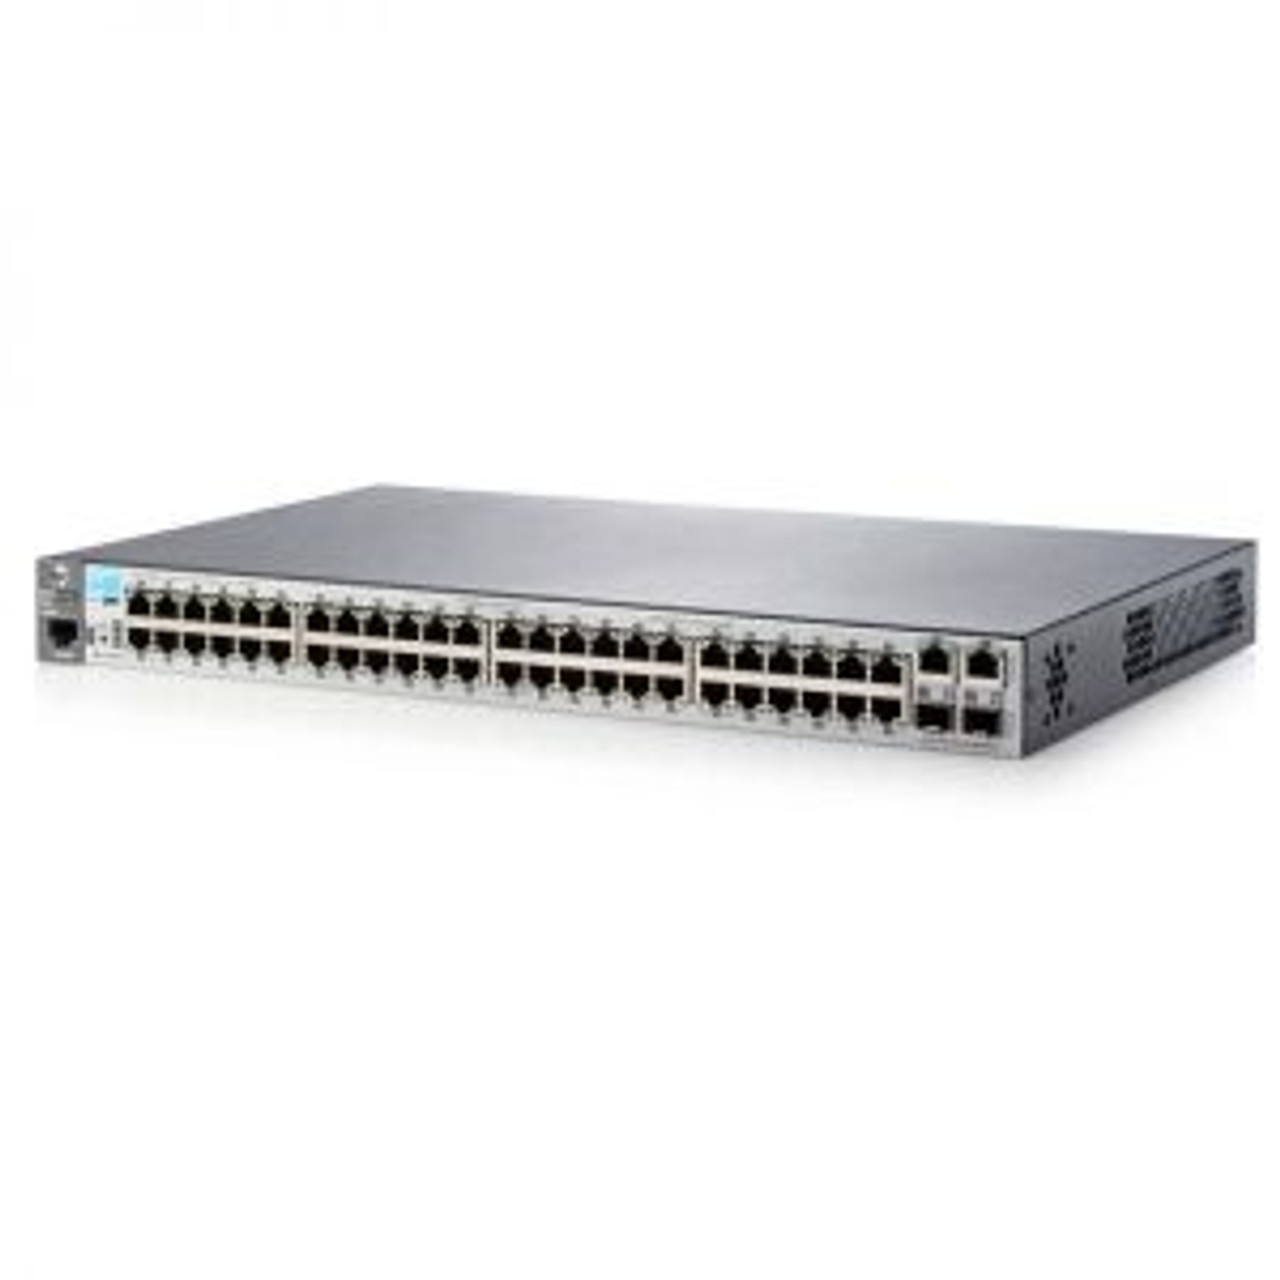 J9781A#B2C | HP | Aruba 48-Port Ethernet Switch